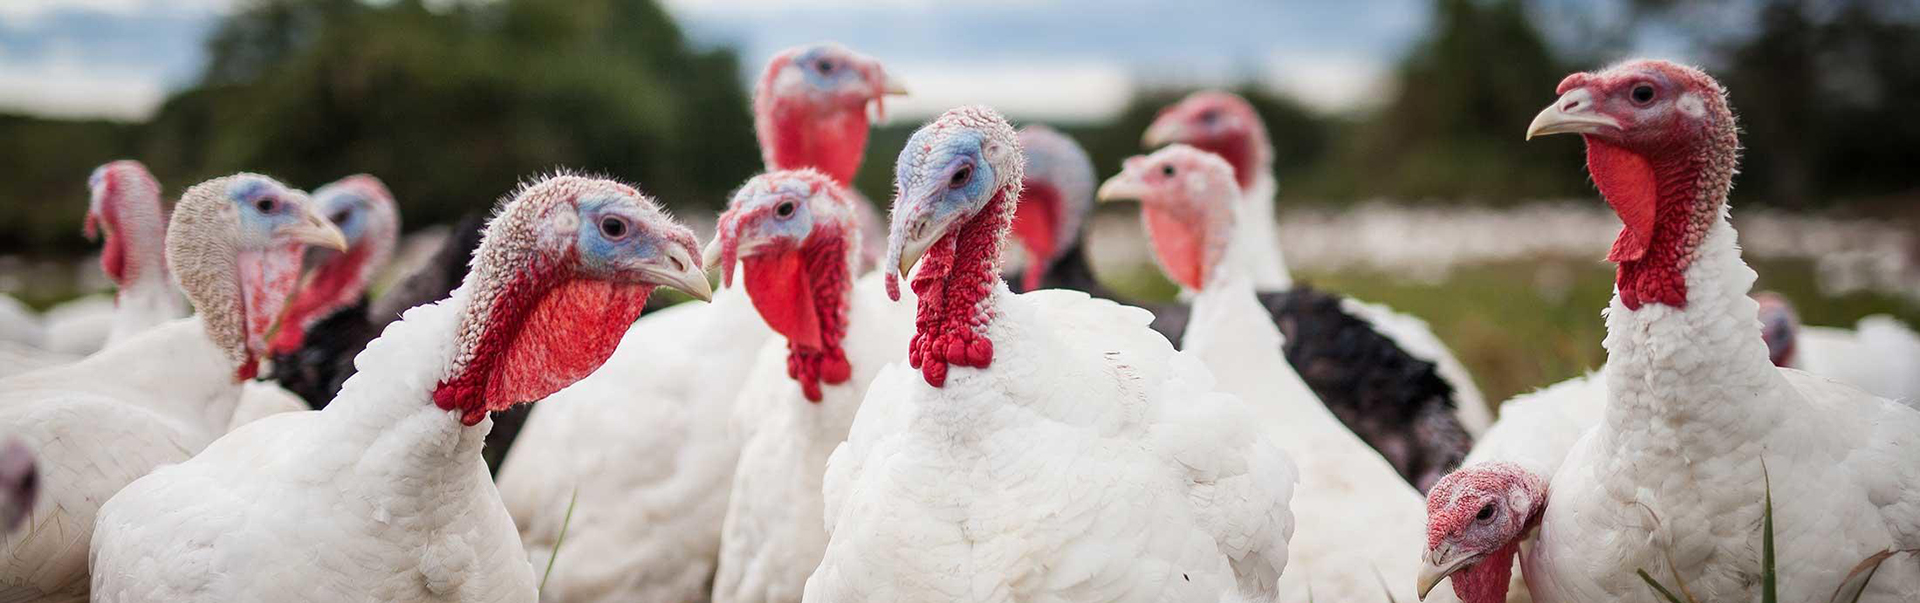 South Carolina Poultry Federation Highlights